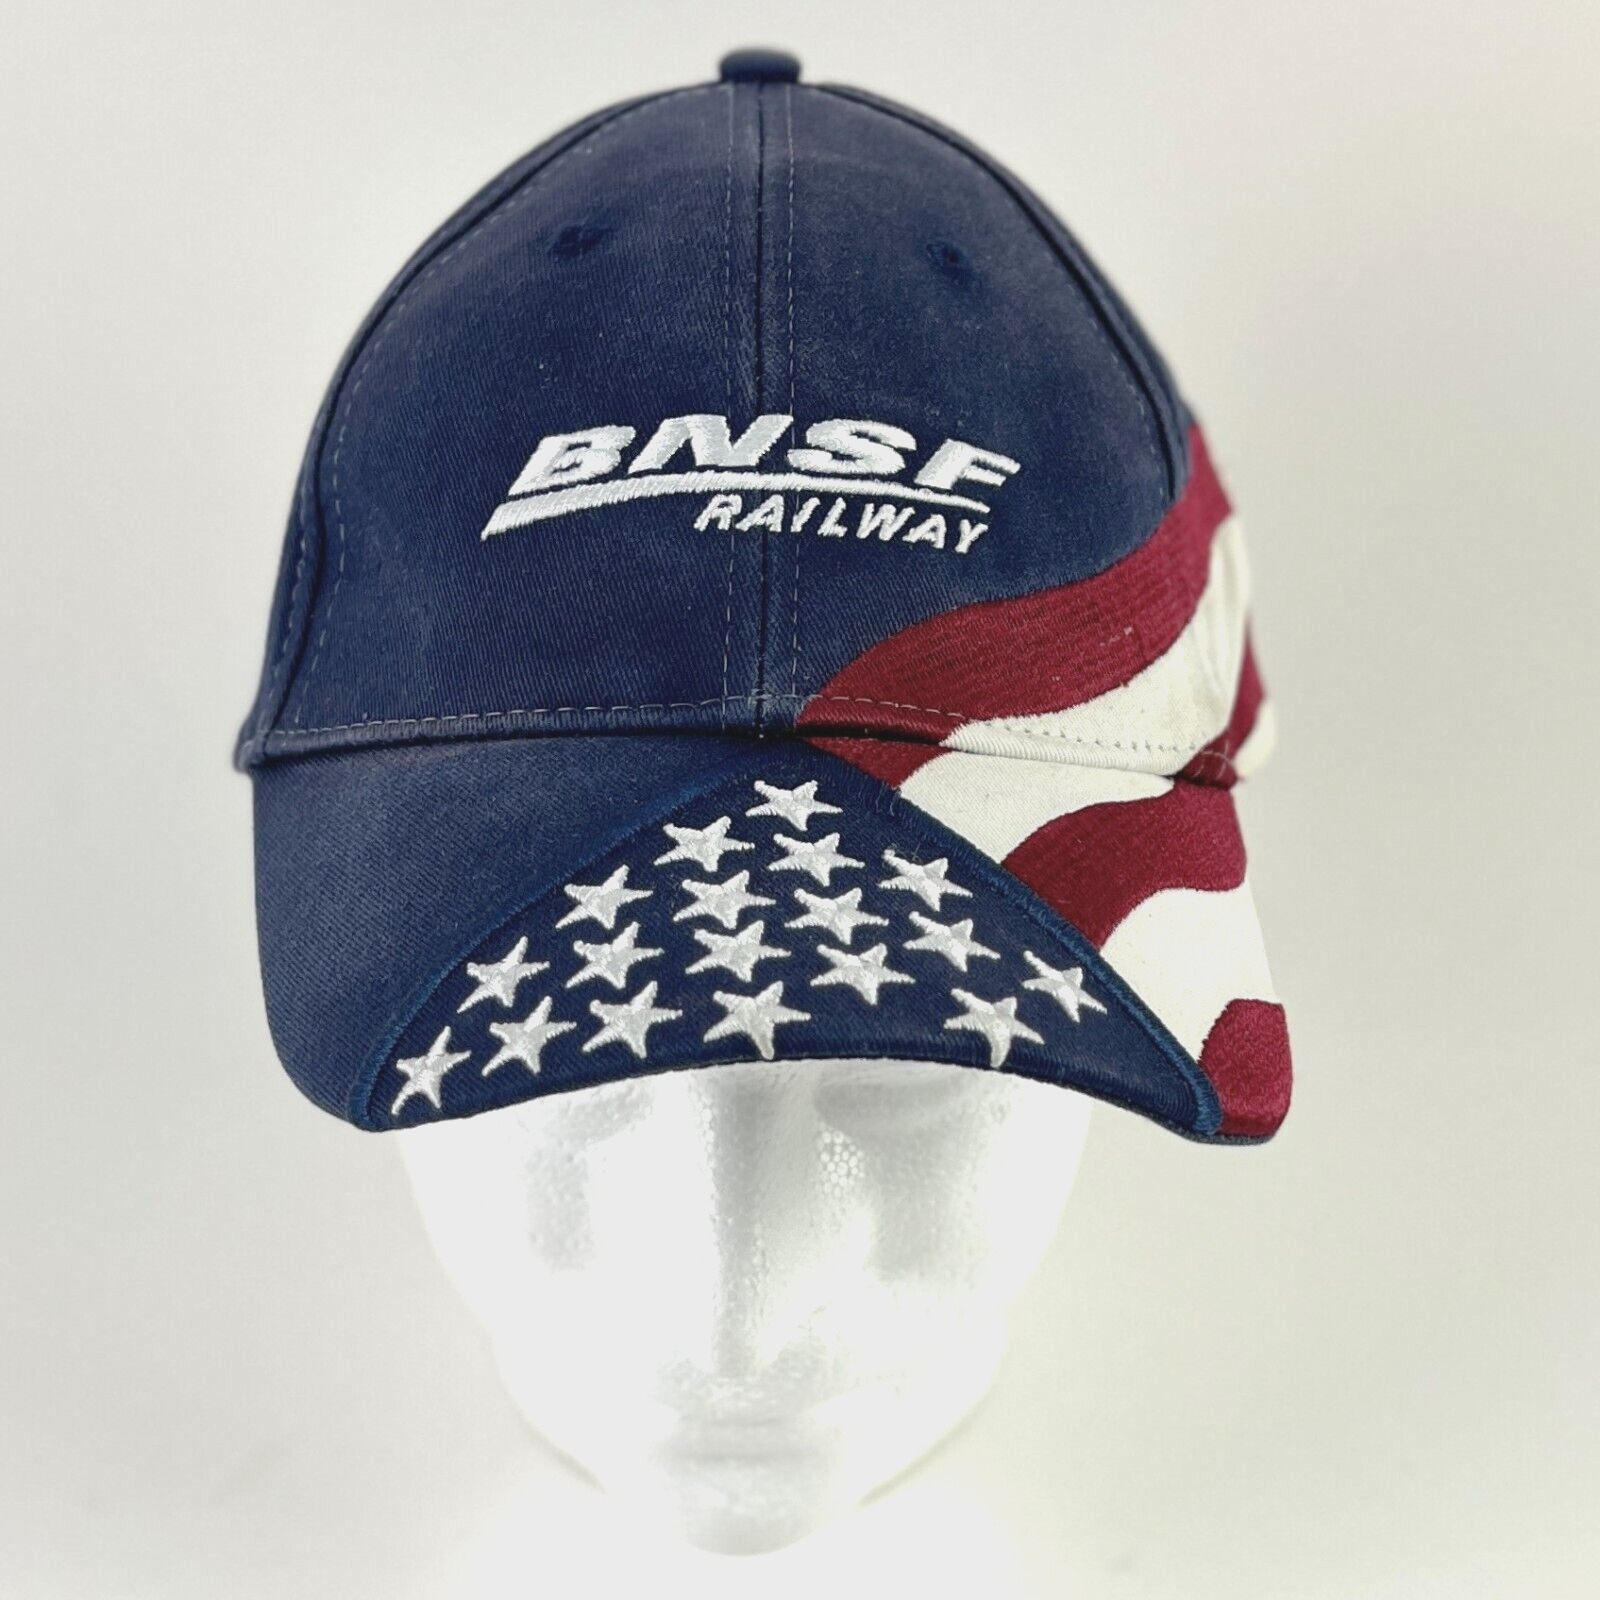 BNSF Railway Baseball Cap hat Stars & Stripes Adjustable fit Adults Patriotic